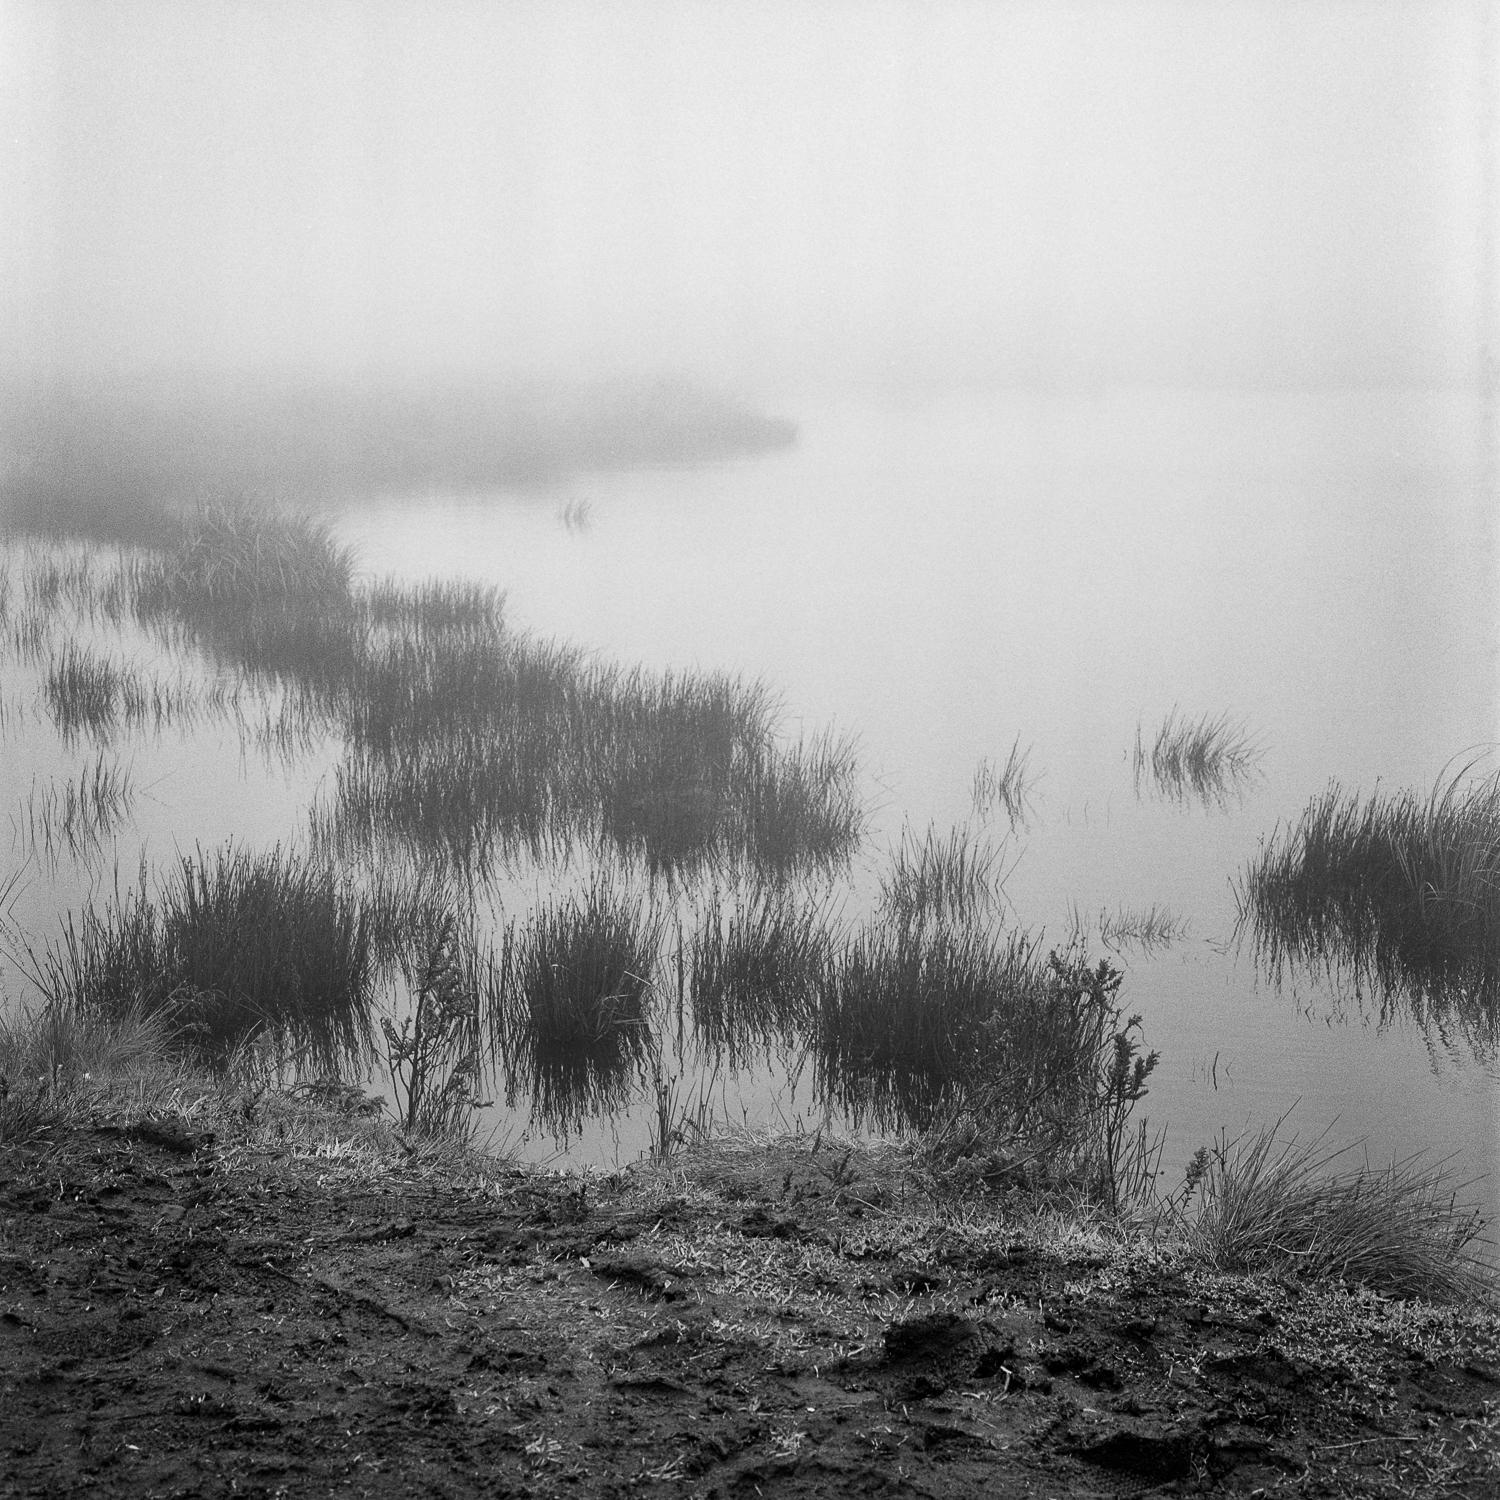 Landscape Photograph Miguel Winograd  - Laguna el Verjn, estampe à la gélatine argentique